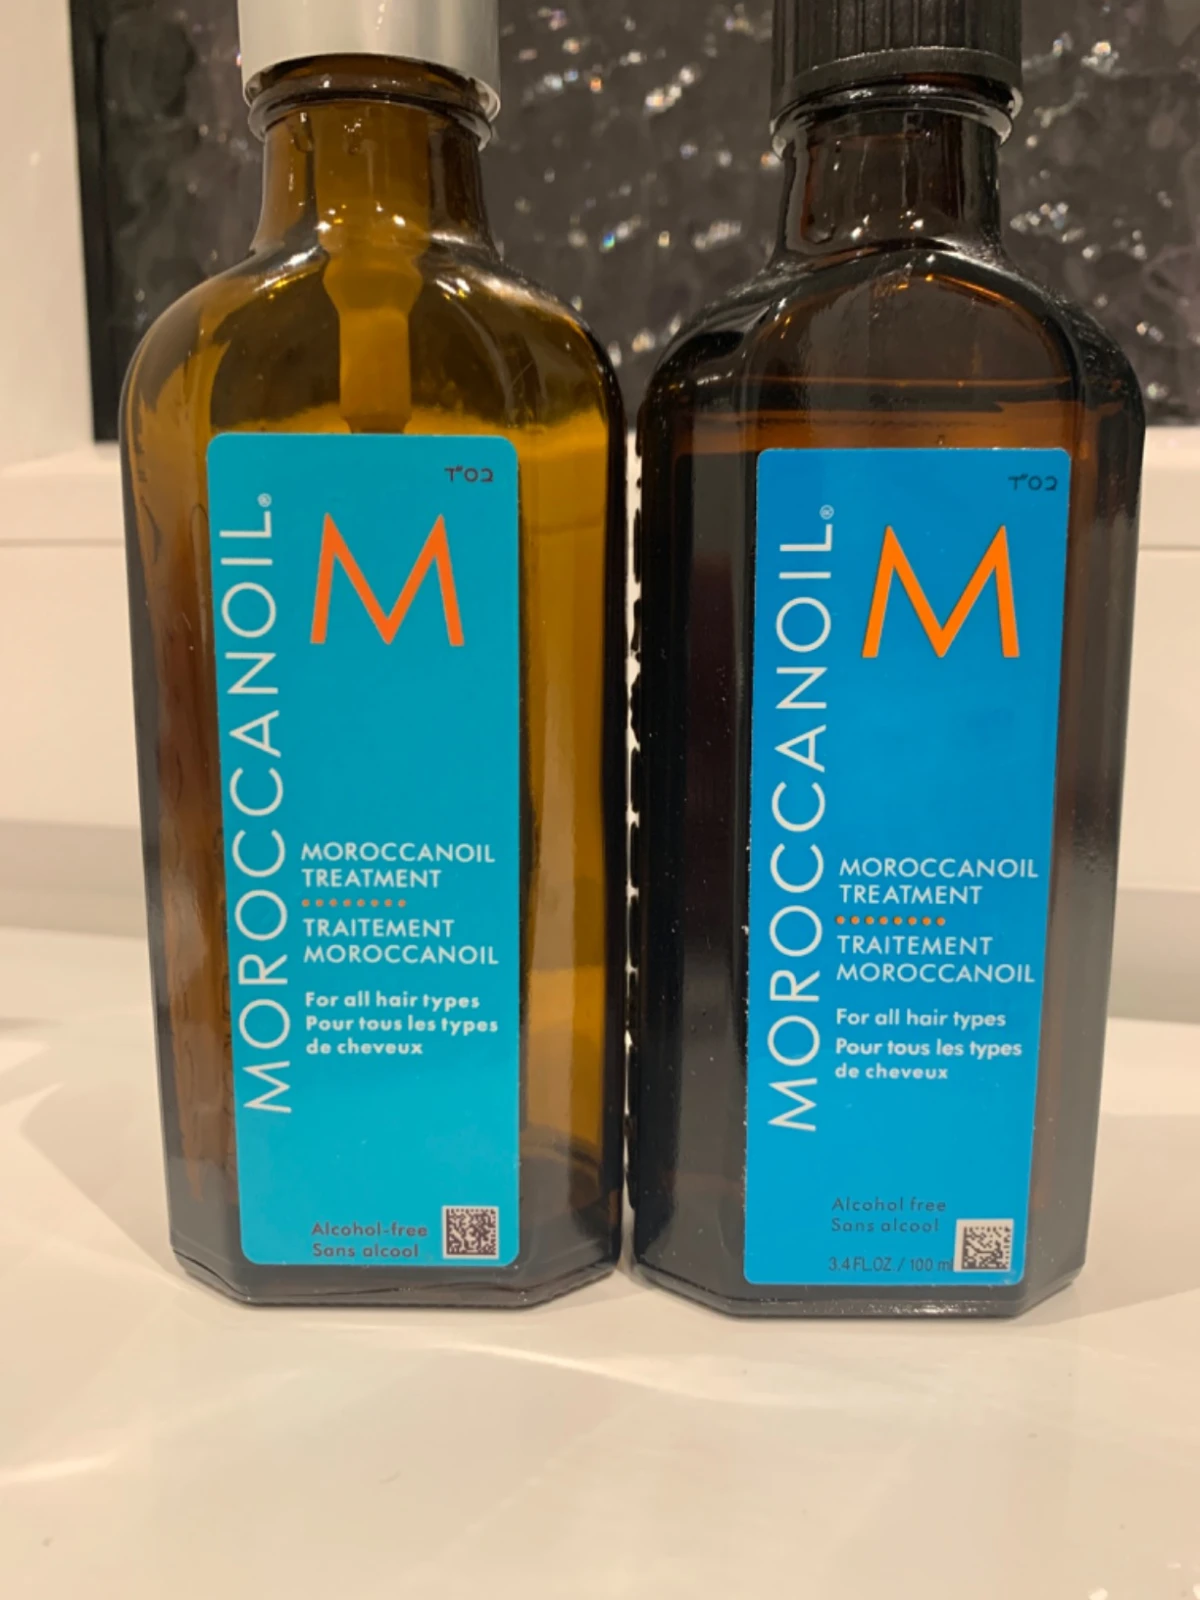 Moroccanoil Treatment Original - review image